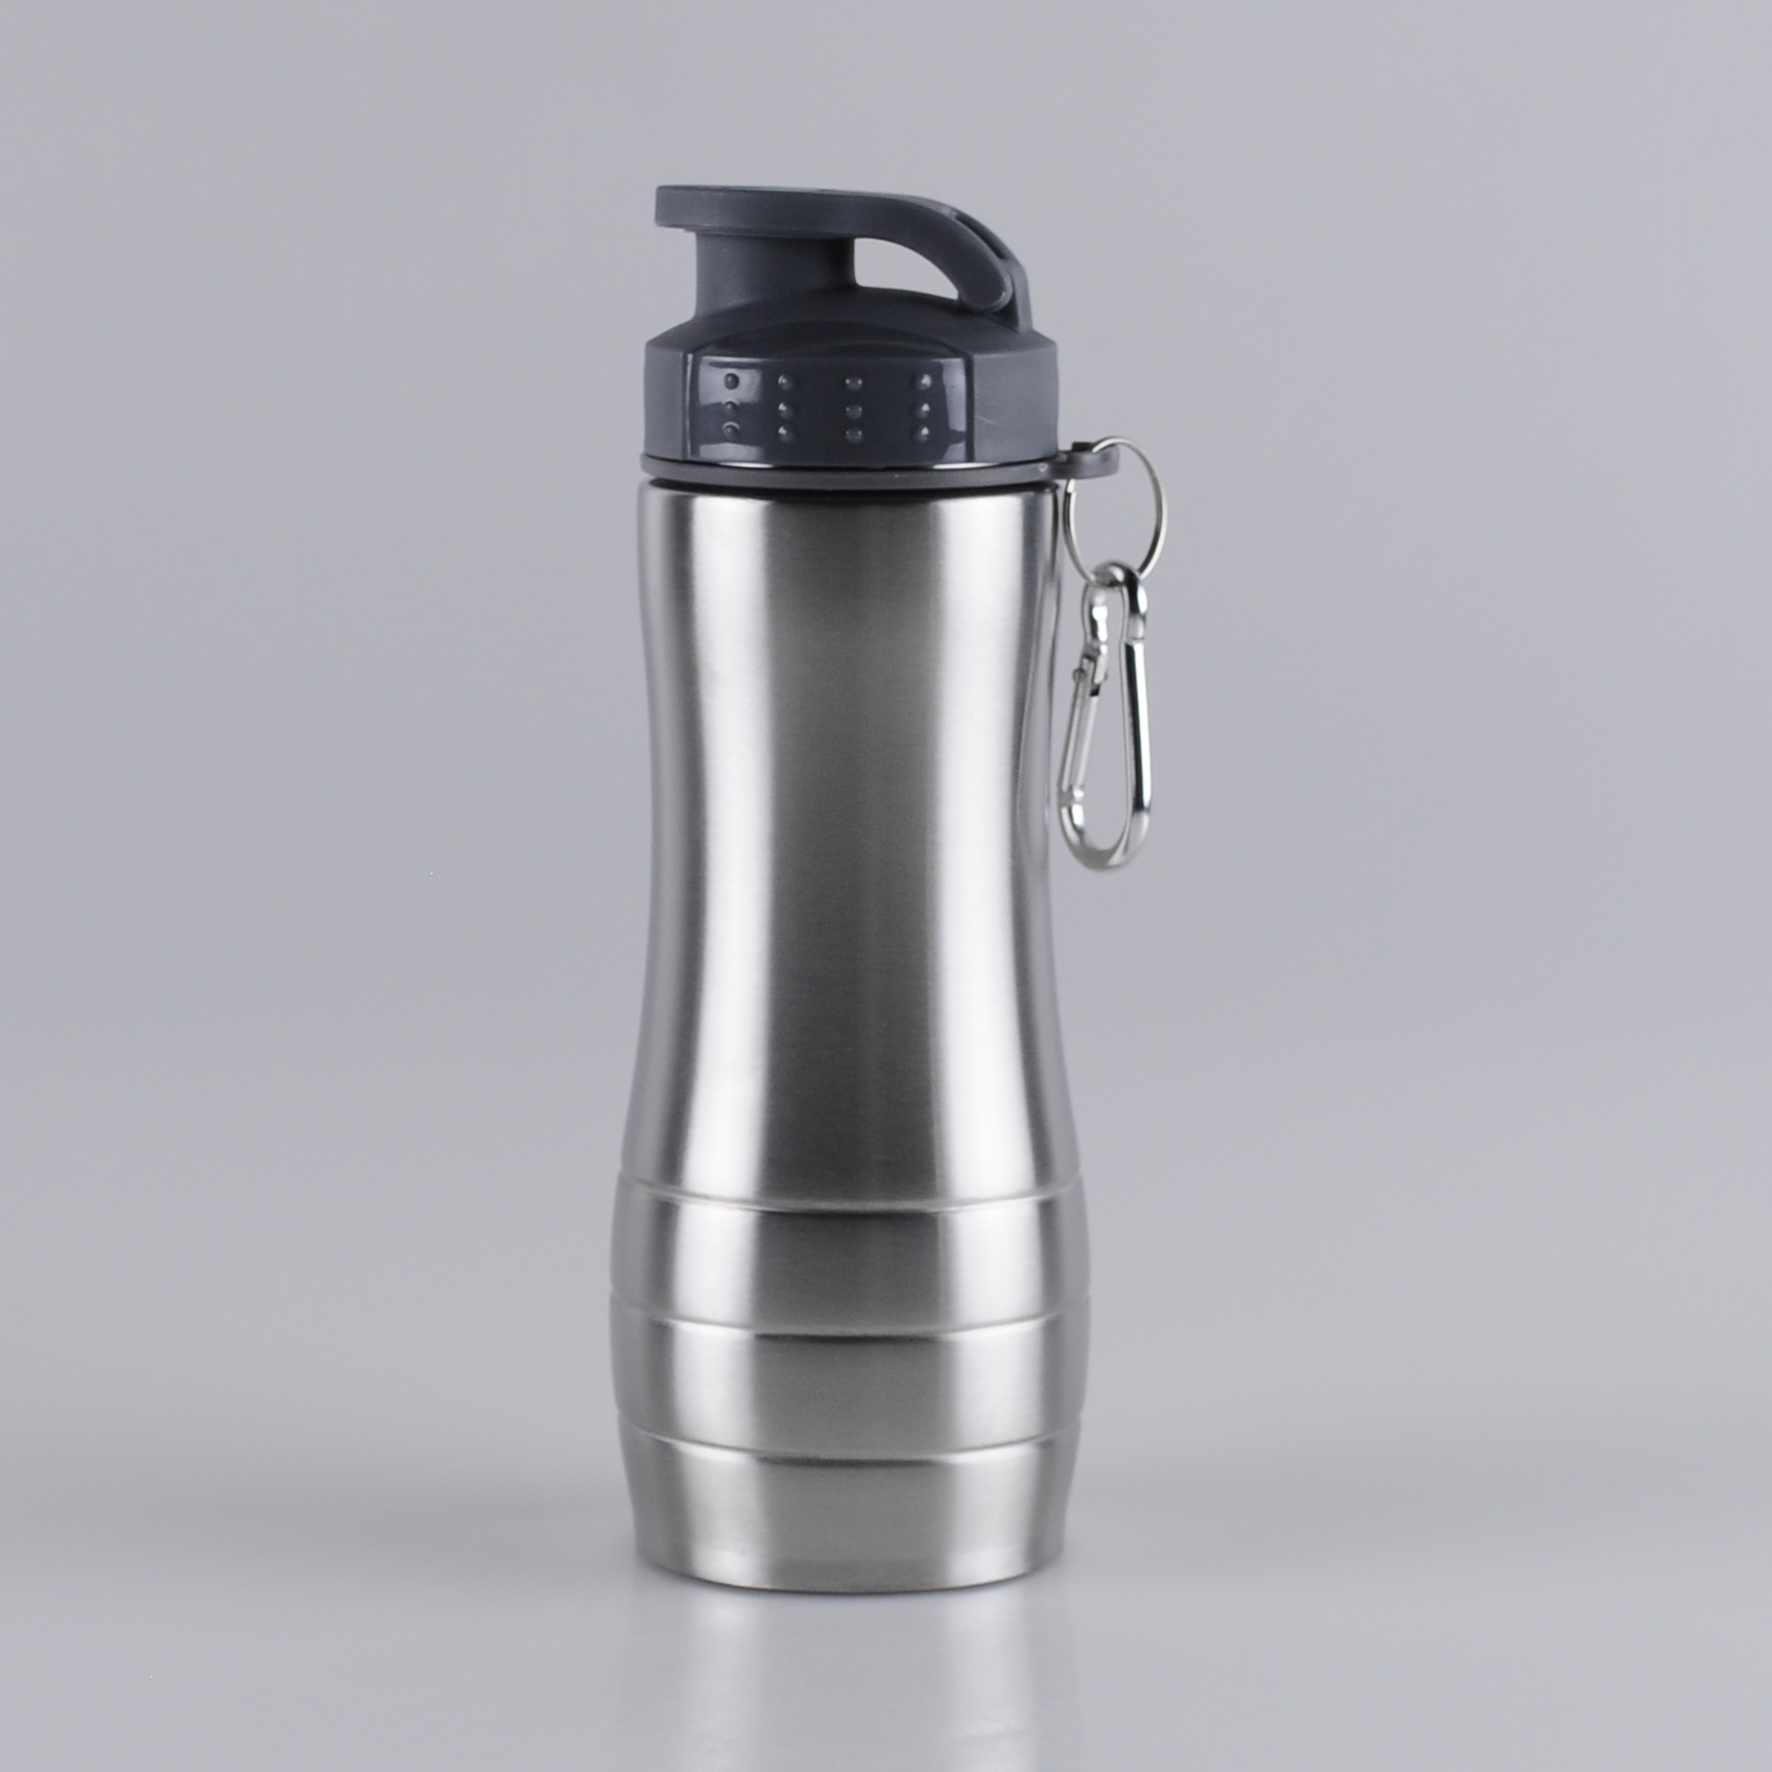 https://www.safeshine.com/wp-content/uploads/2018/07/600ml-750ml-flip-top-stainless-steel-sports-bottle-with-attachable-carabiner-4.jpg